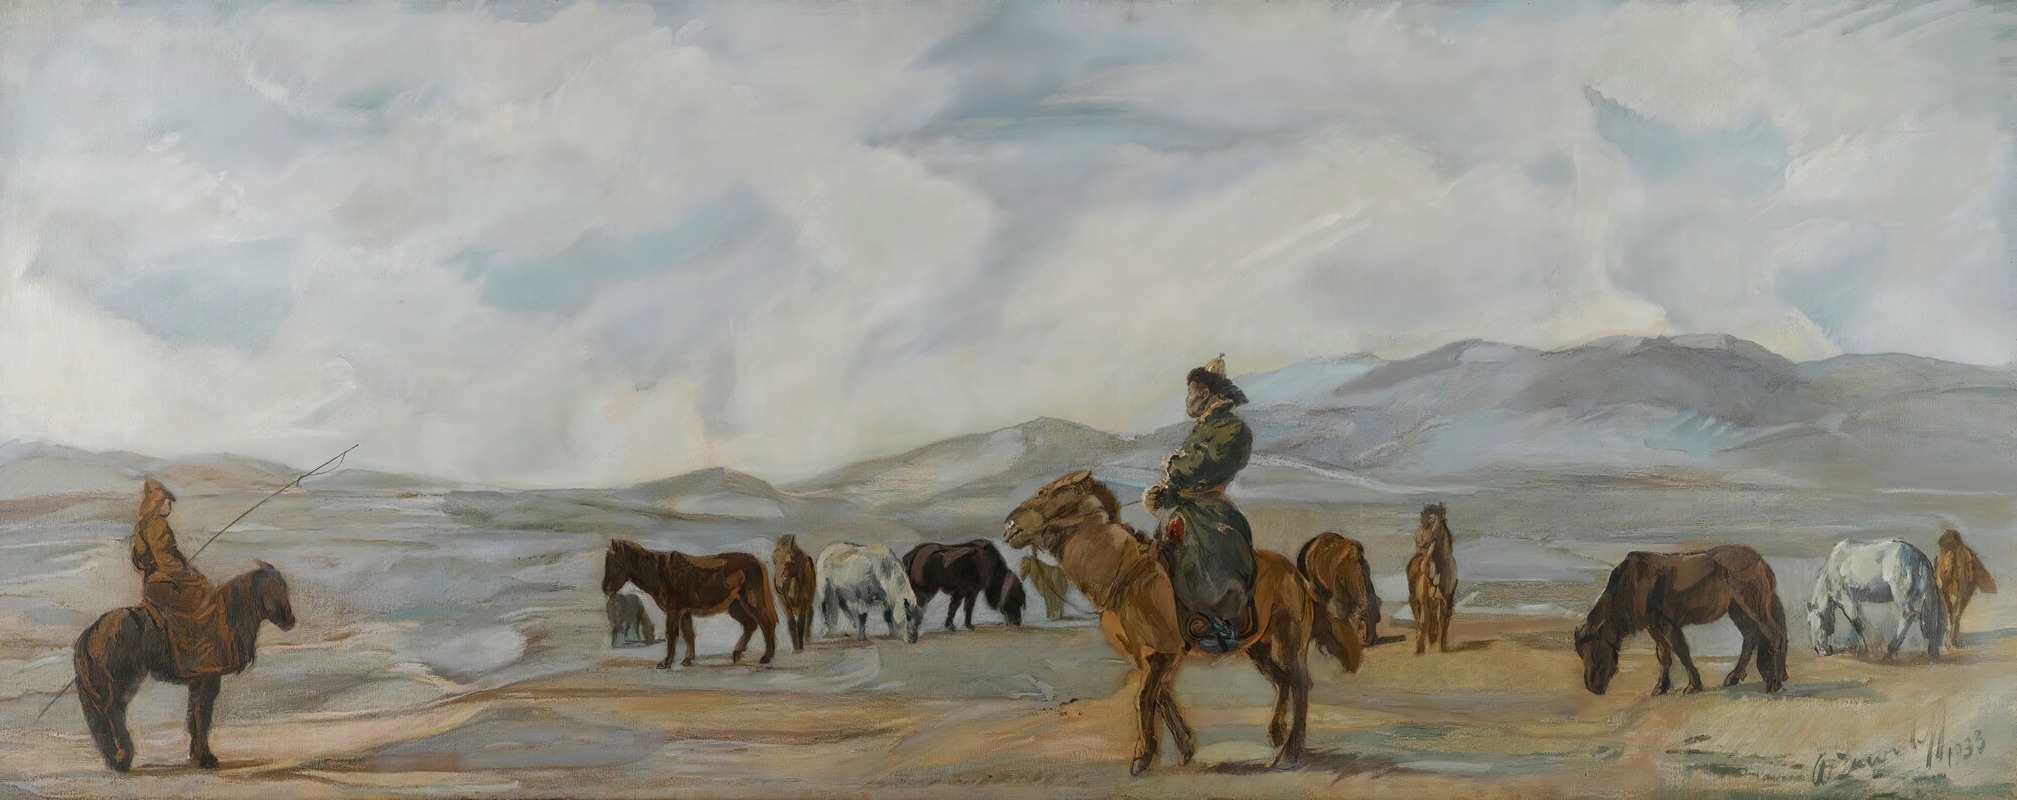 Alexandre Jacovleff - Mongolian Horsemen